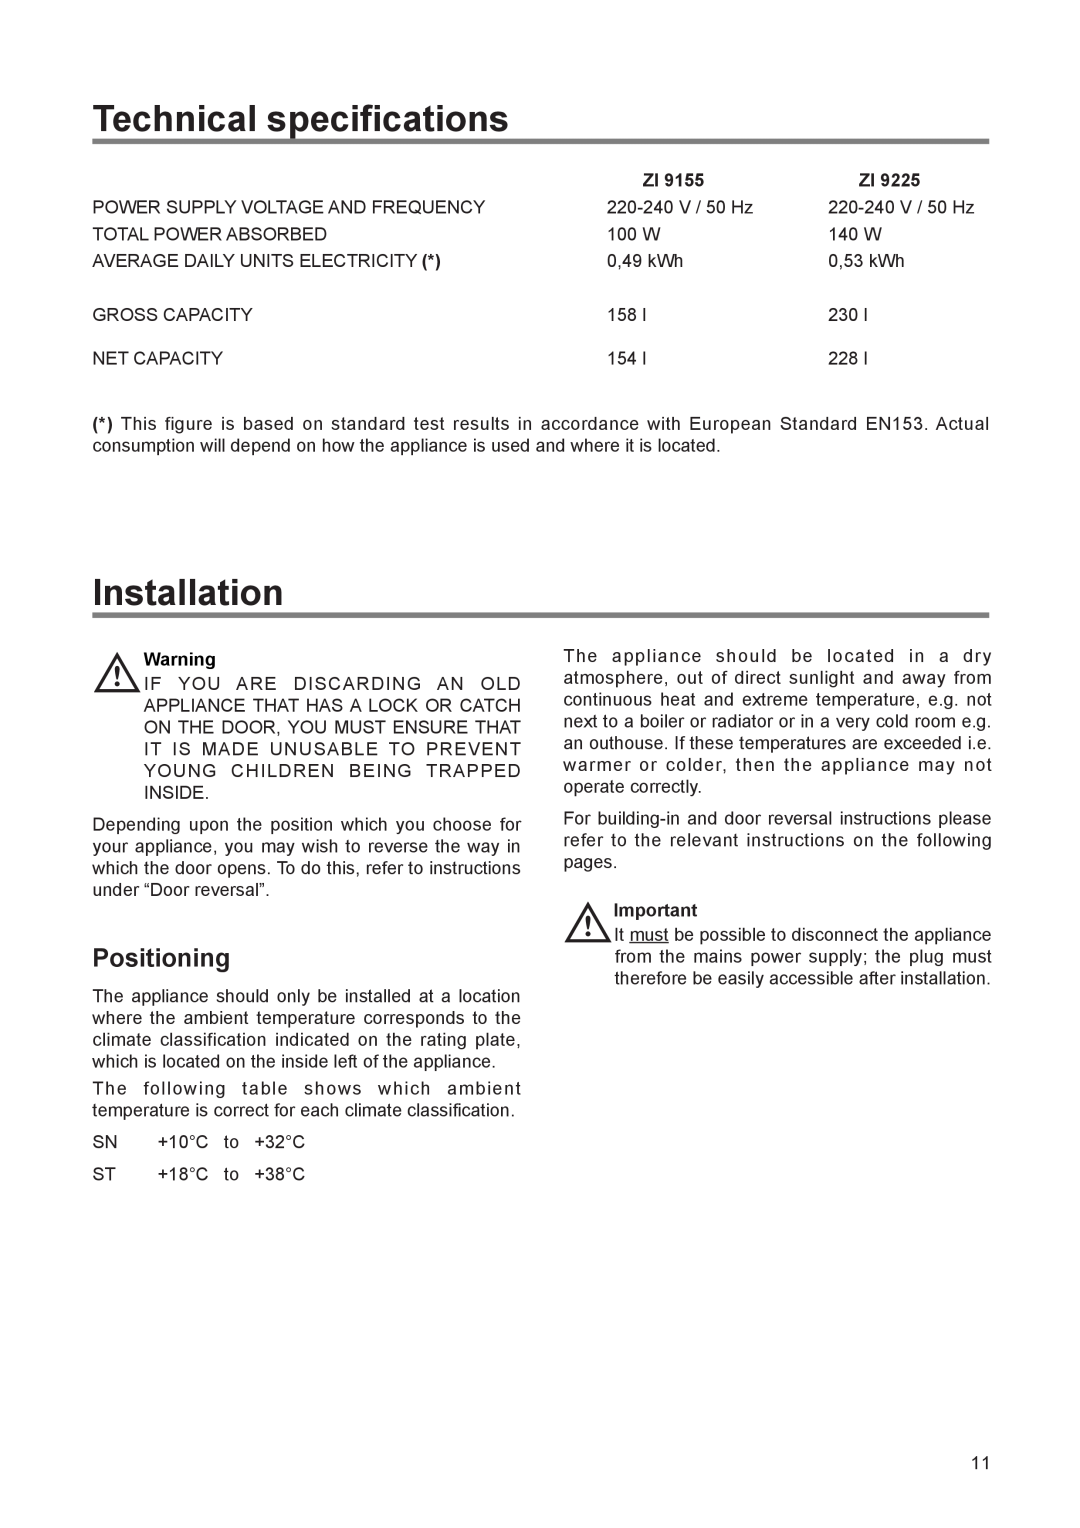 Zanussi ZI 9225, ZI 9155 manual Technical specifications, Installation, Positioning 